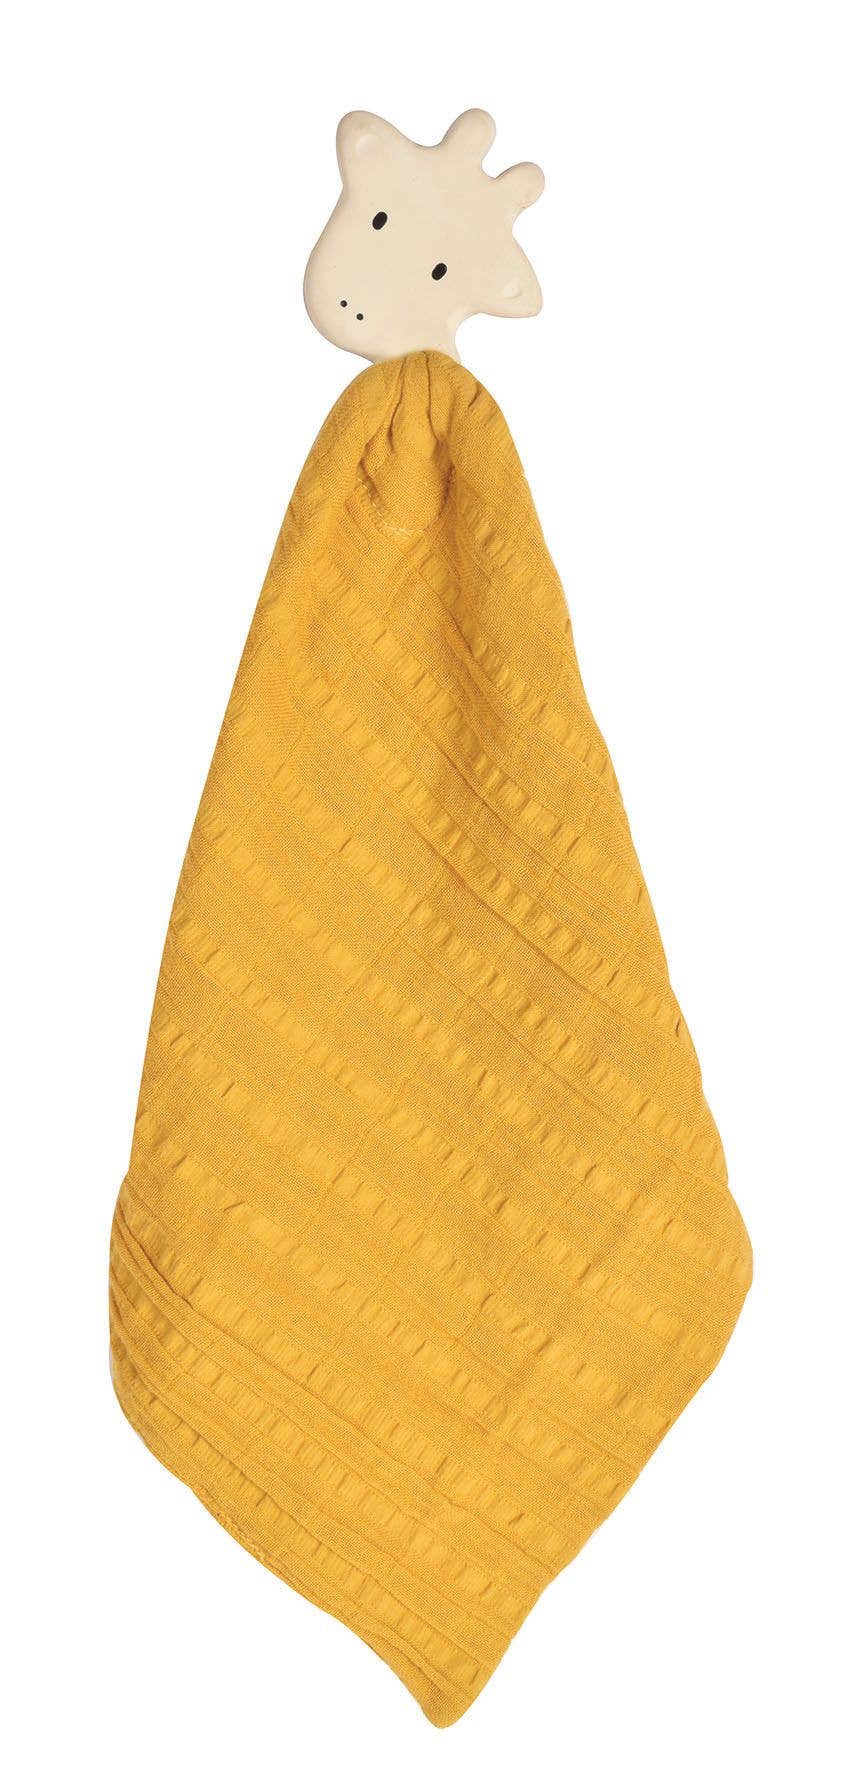 Giraffe Comforter-Mustard Yellow w/Natural Rubber Teether